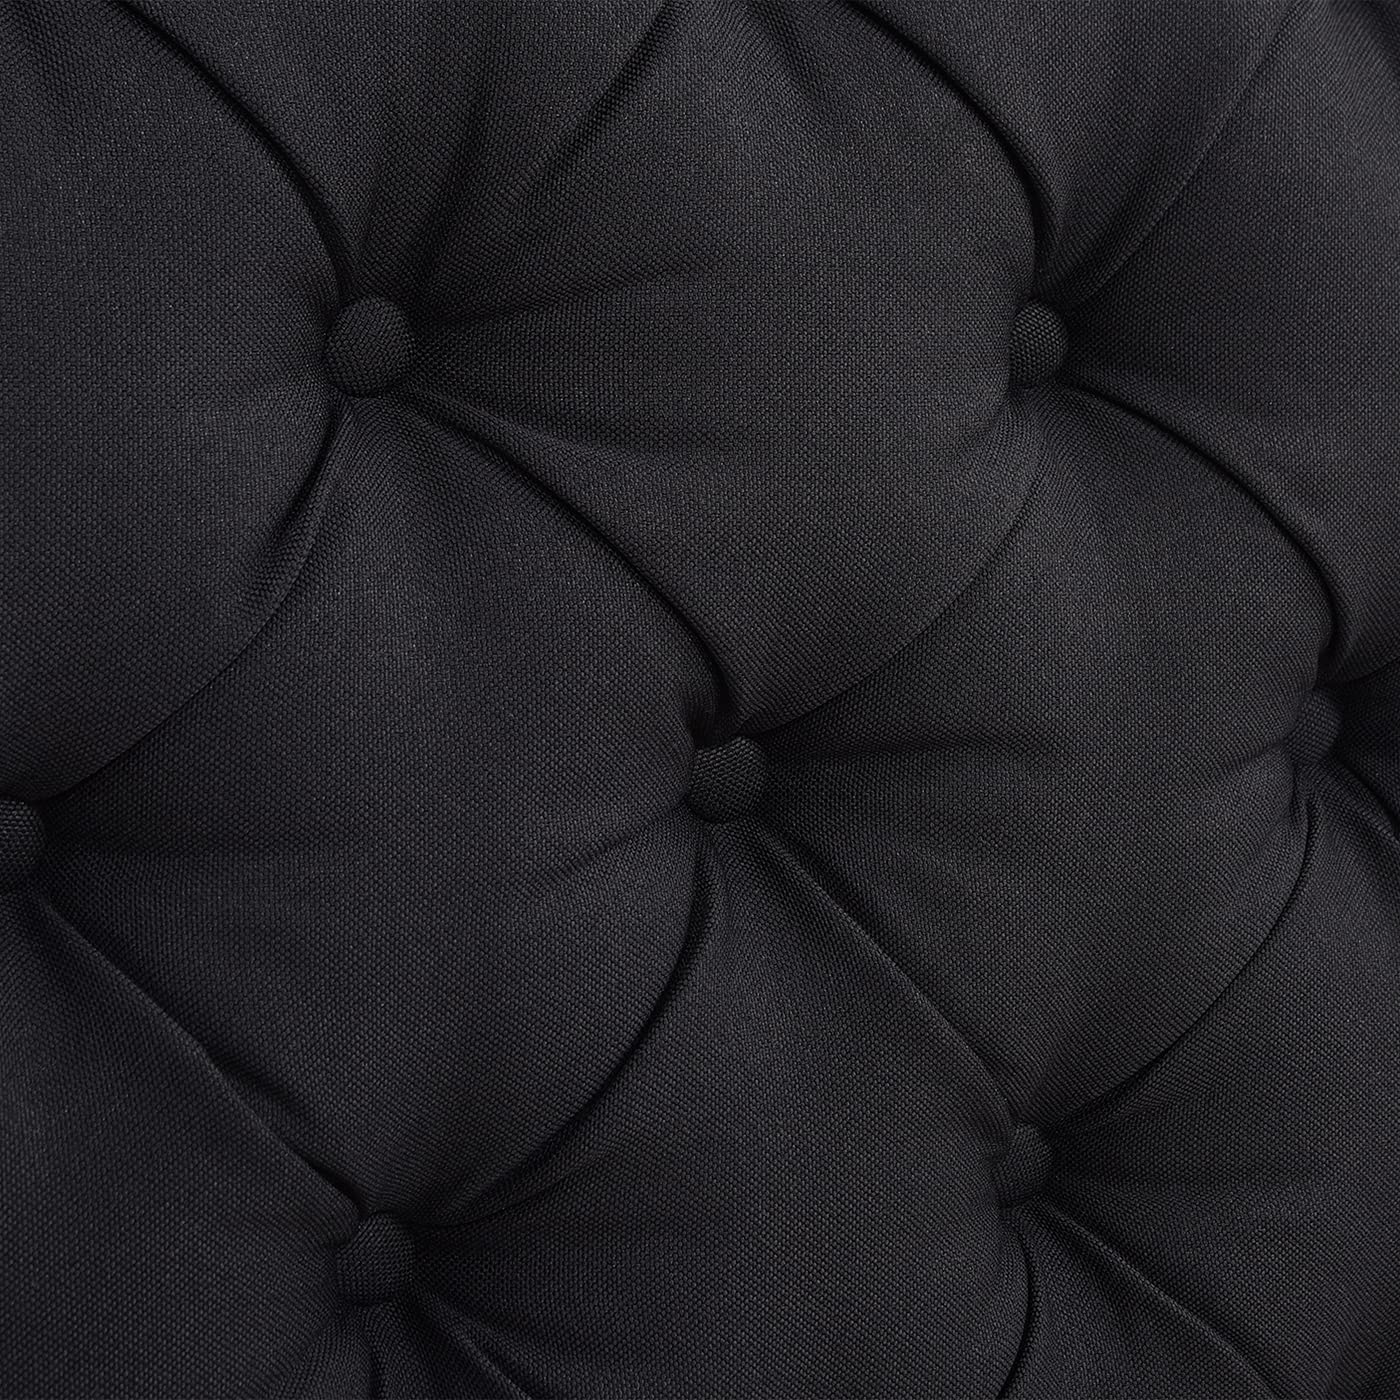 Marcella Jet Black Queen Upholstered Bed - $389